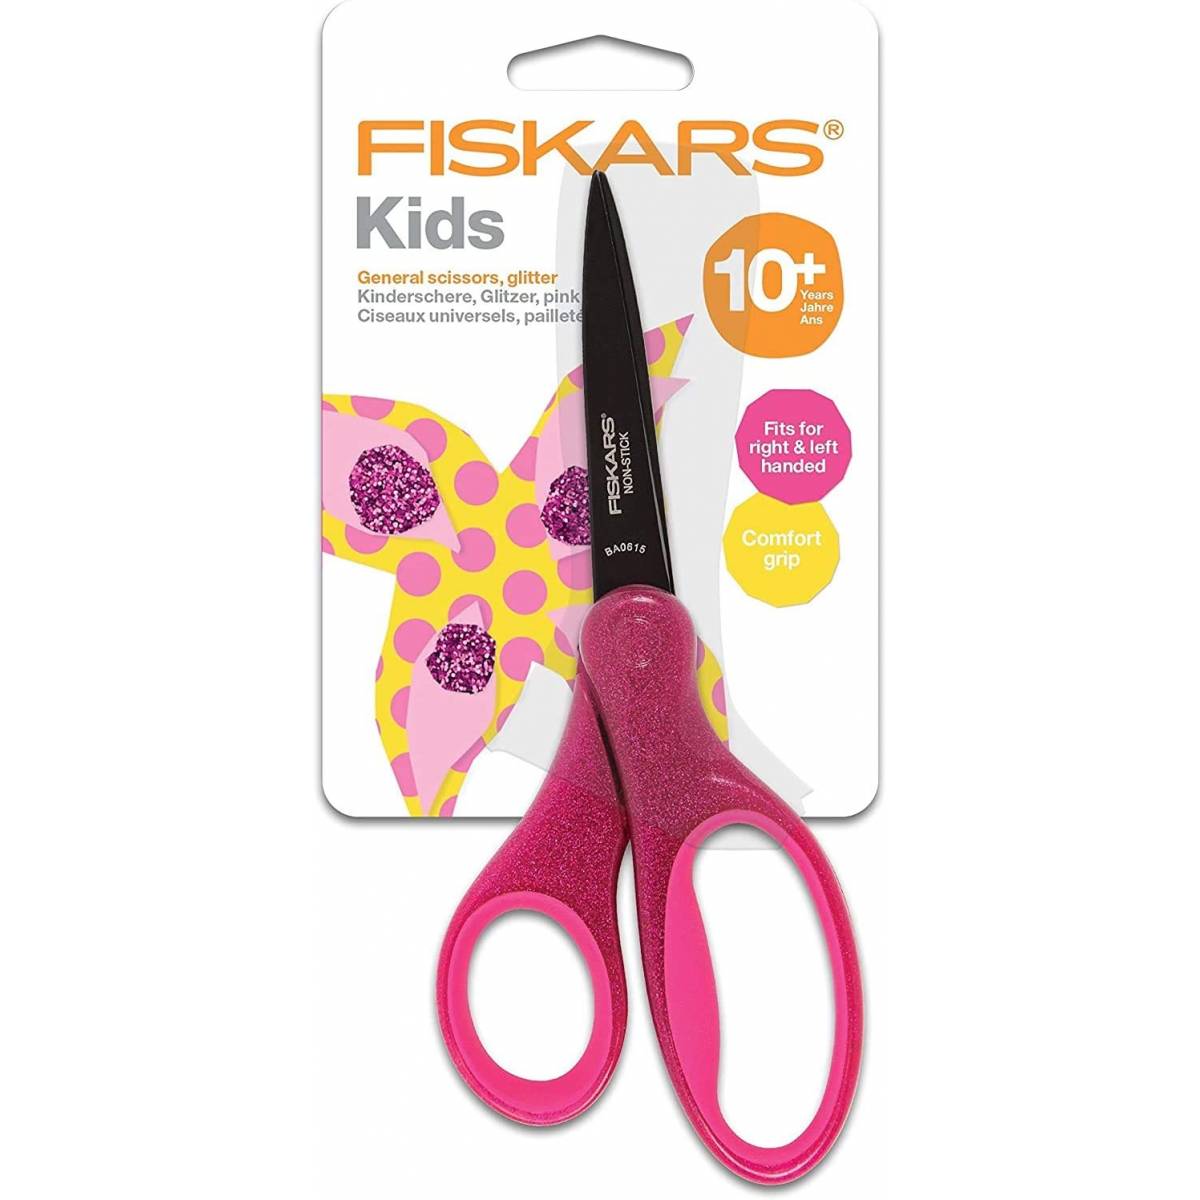 https://www.maxxidiscount.com/37515-large_default/fiskars-children-s-scissors-15cm-10yrs-shiny-pink.jpg